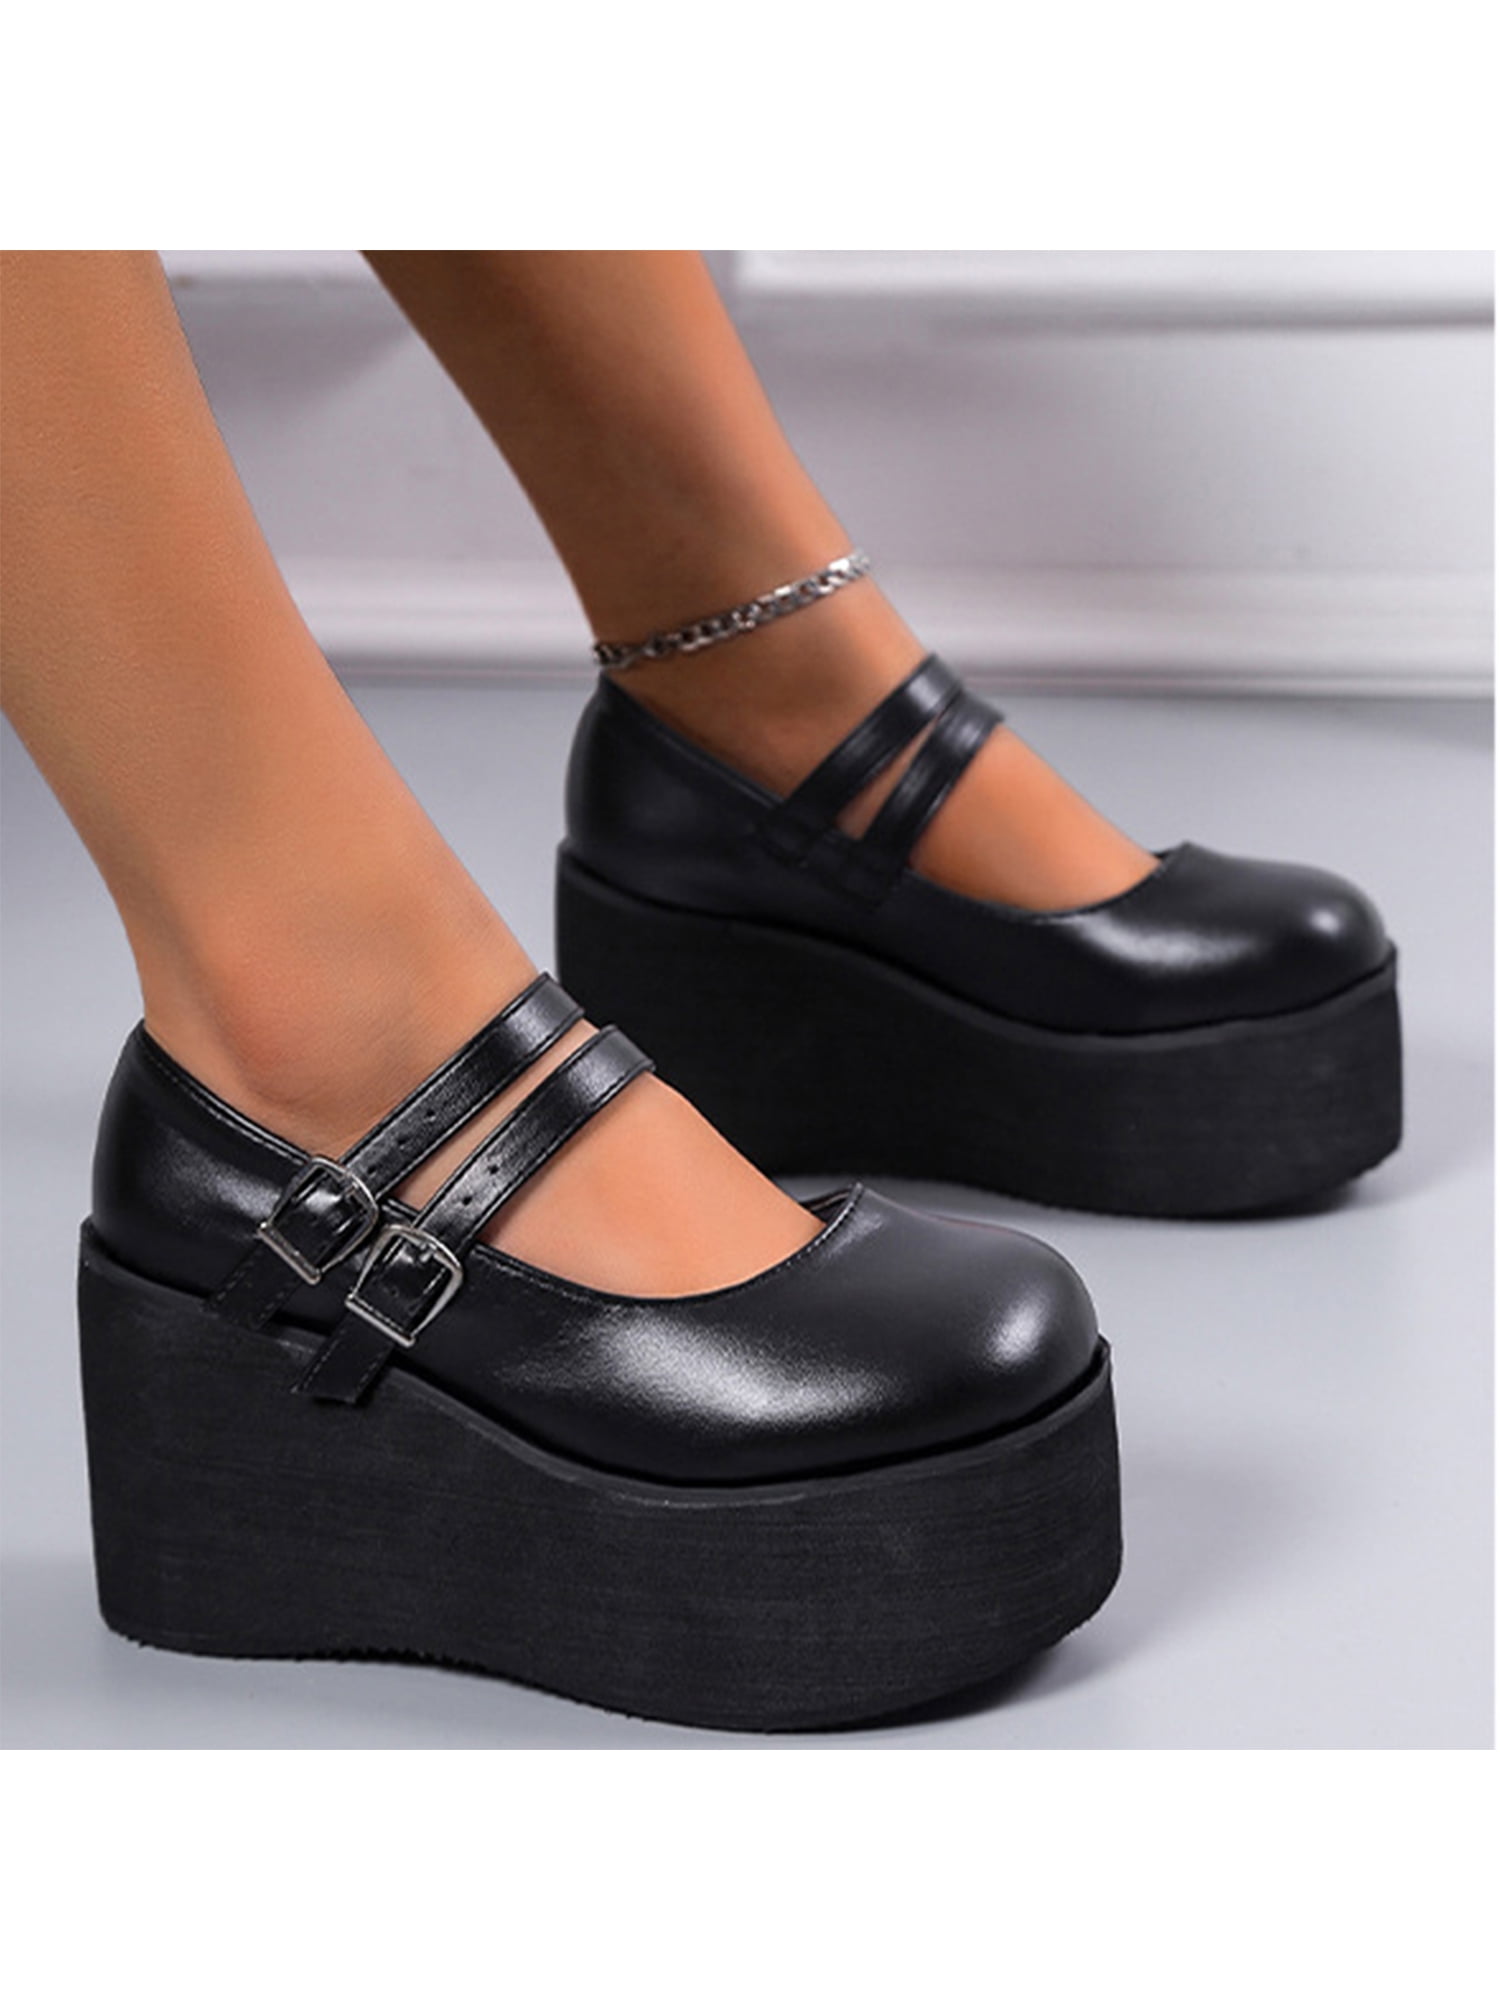 SIMANLAN Women Shoes Platform Mary Janes Gothic Ankle Strap Uniform ...